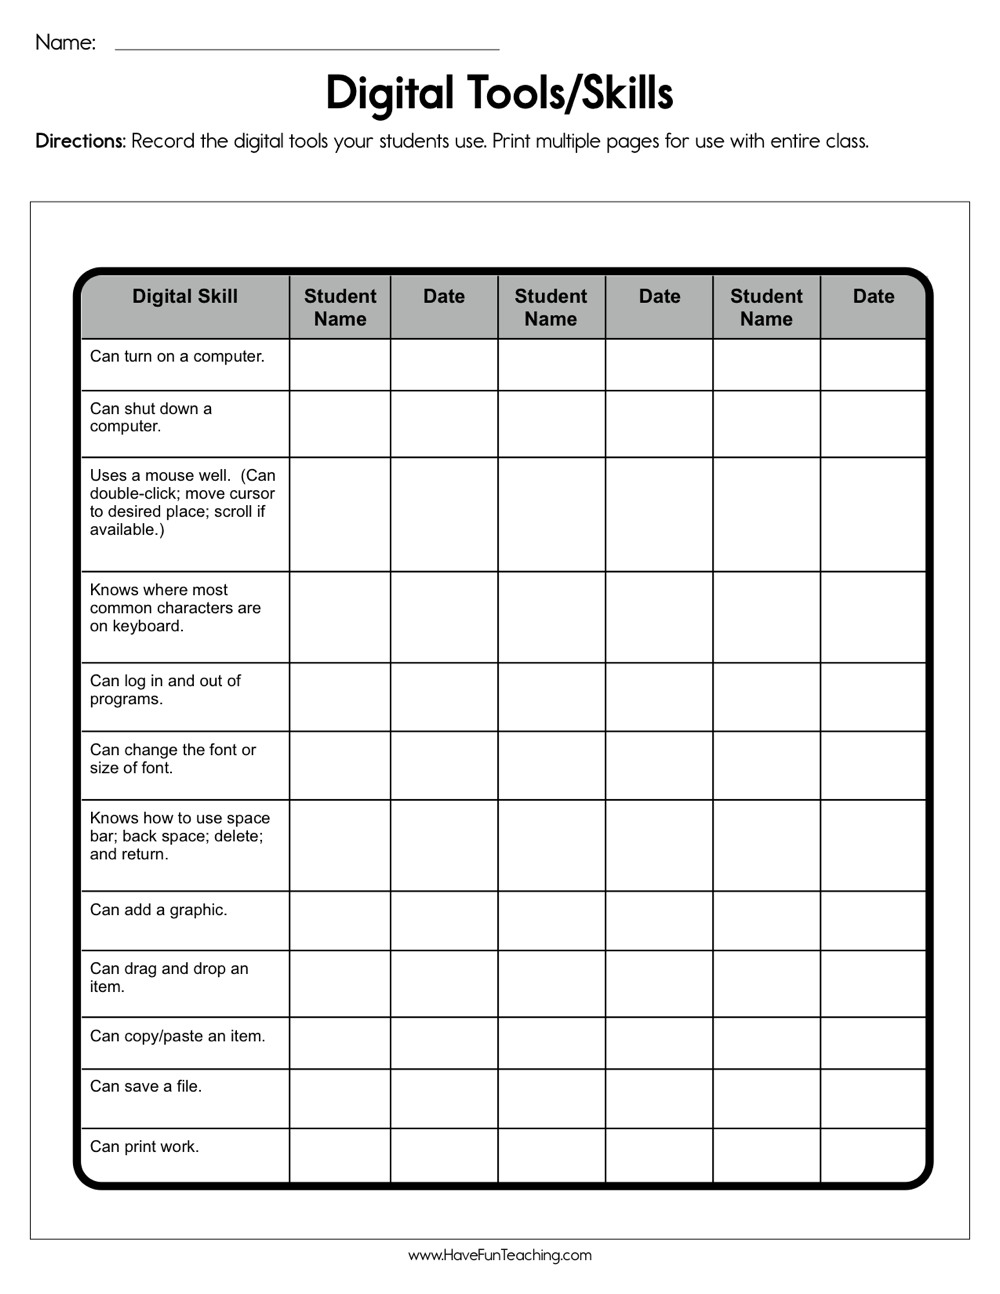 Digital Tools Skills Assessment Worksheet  Have Fun Teaching